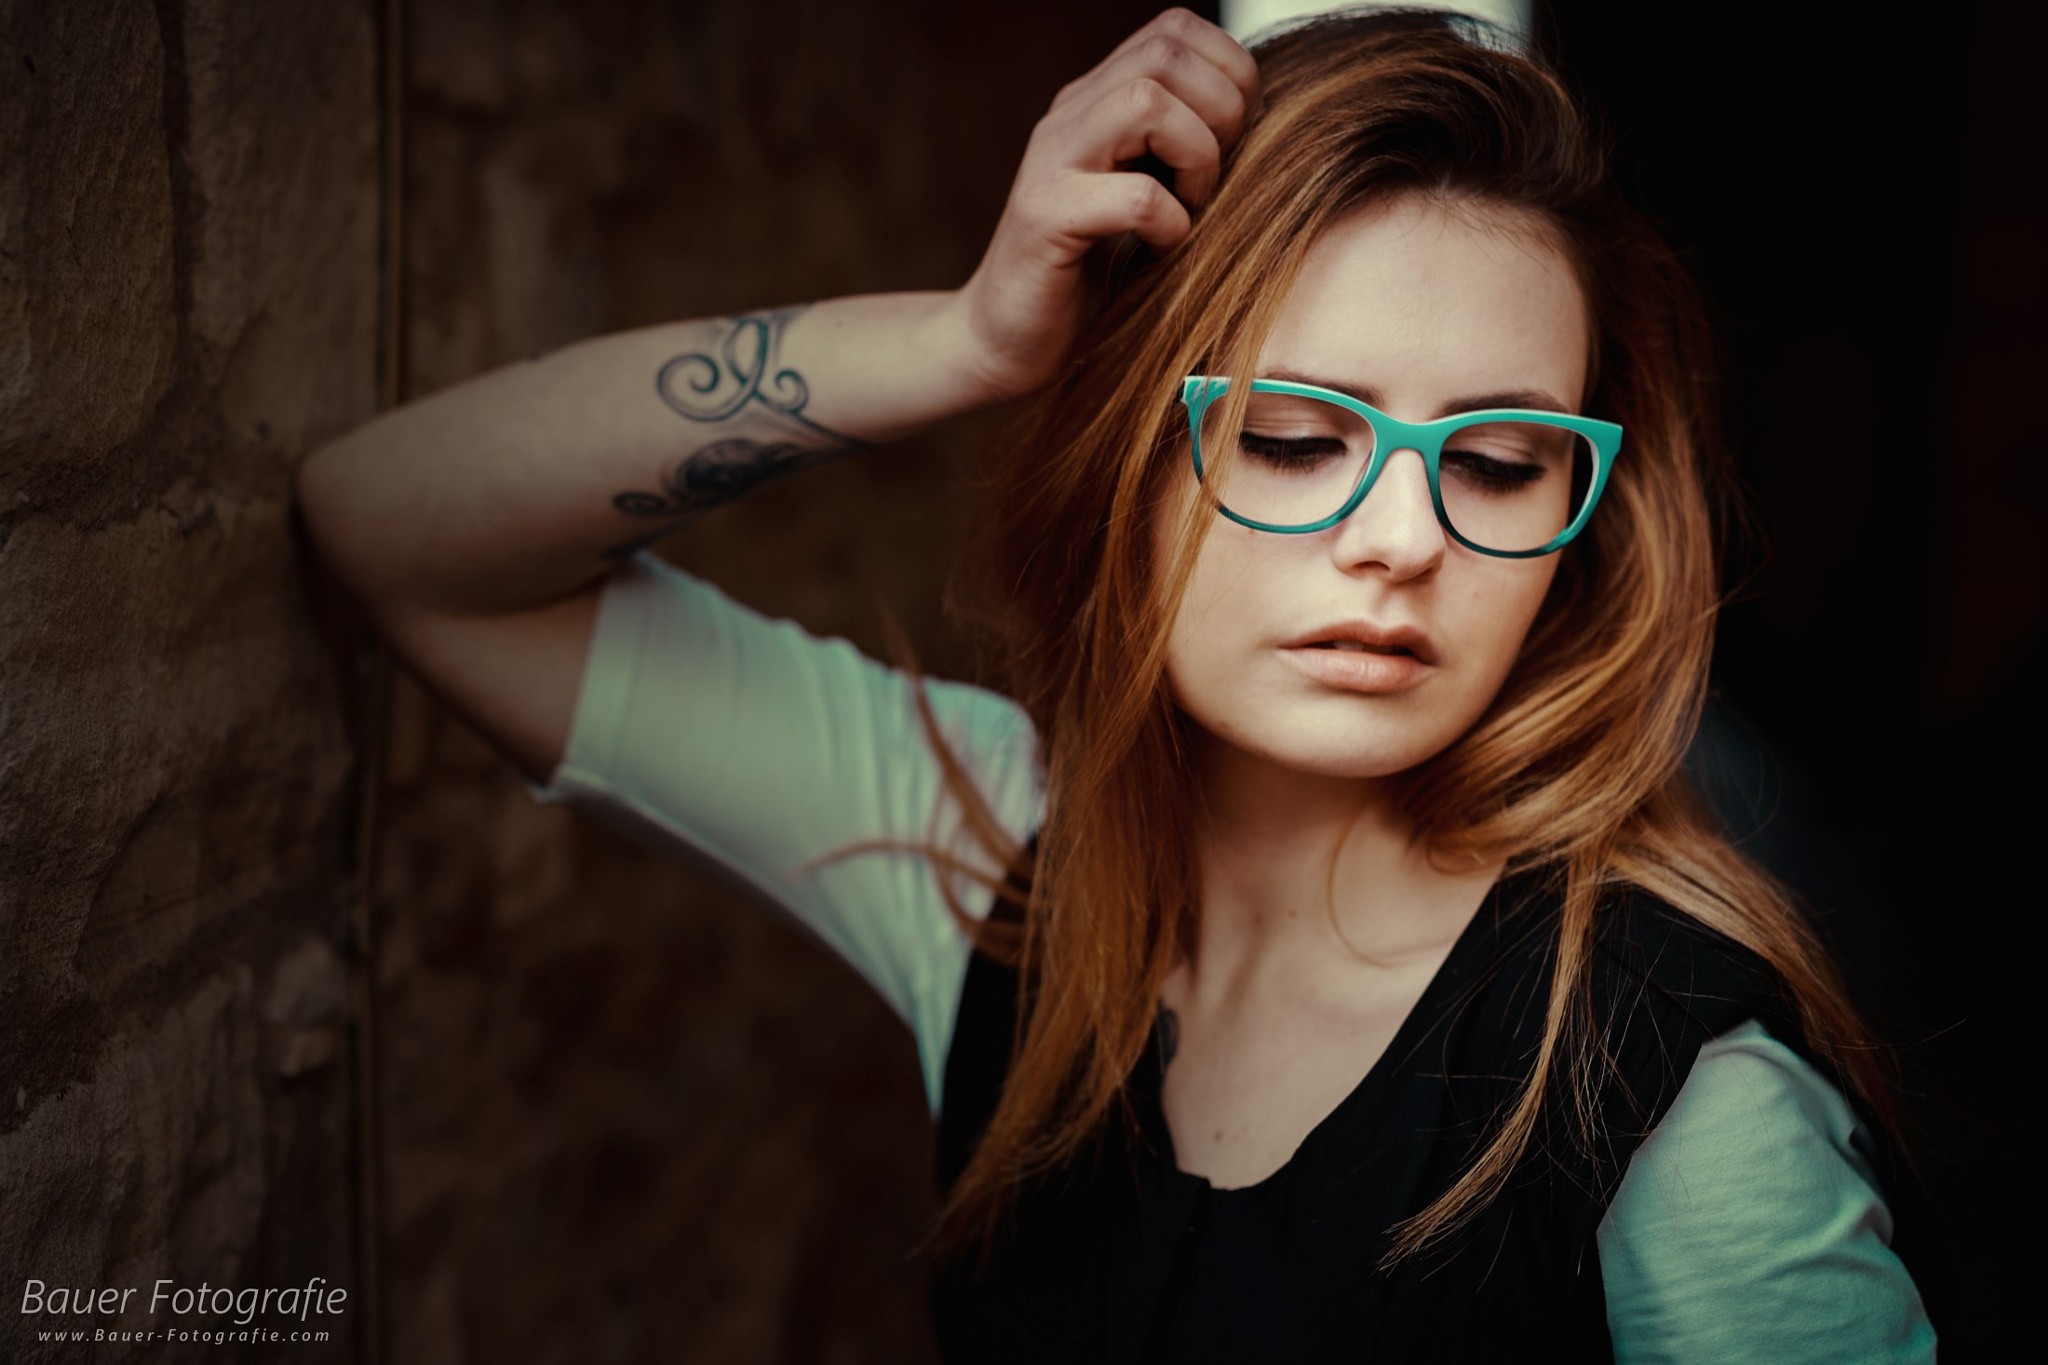 Women Redhead Women With Glasses Tattoo Portrait Hands On Head Wallpaper Resolution 2048x1365